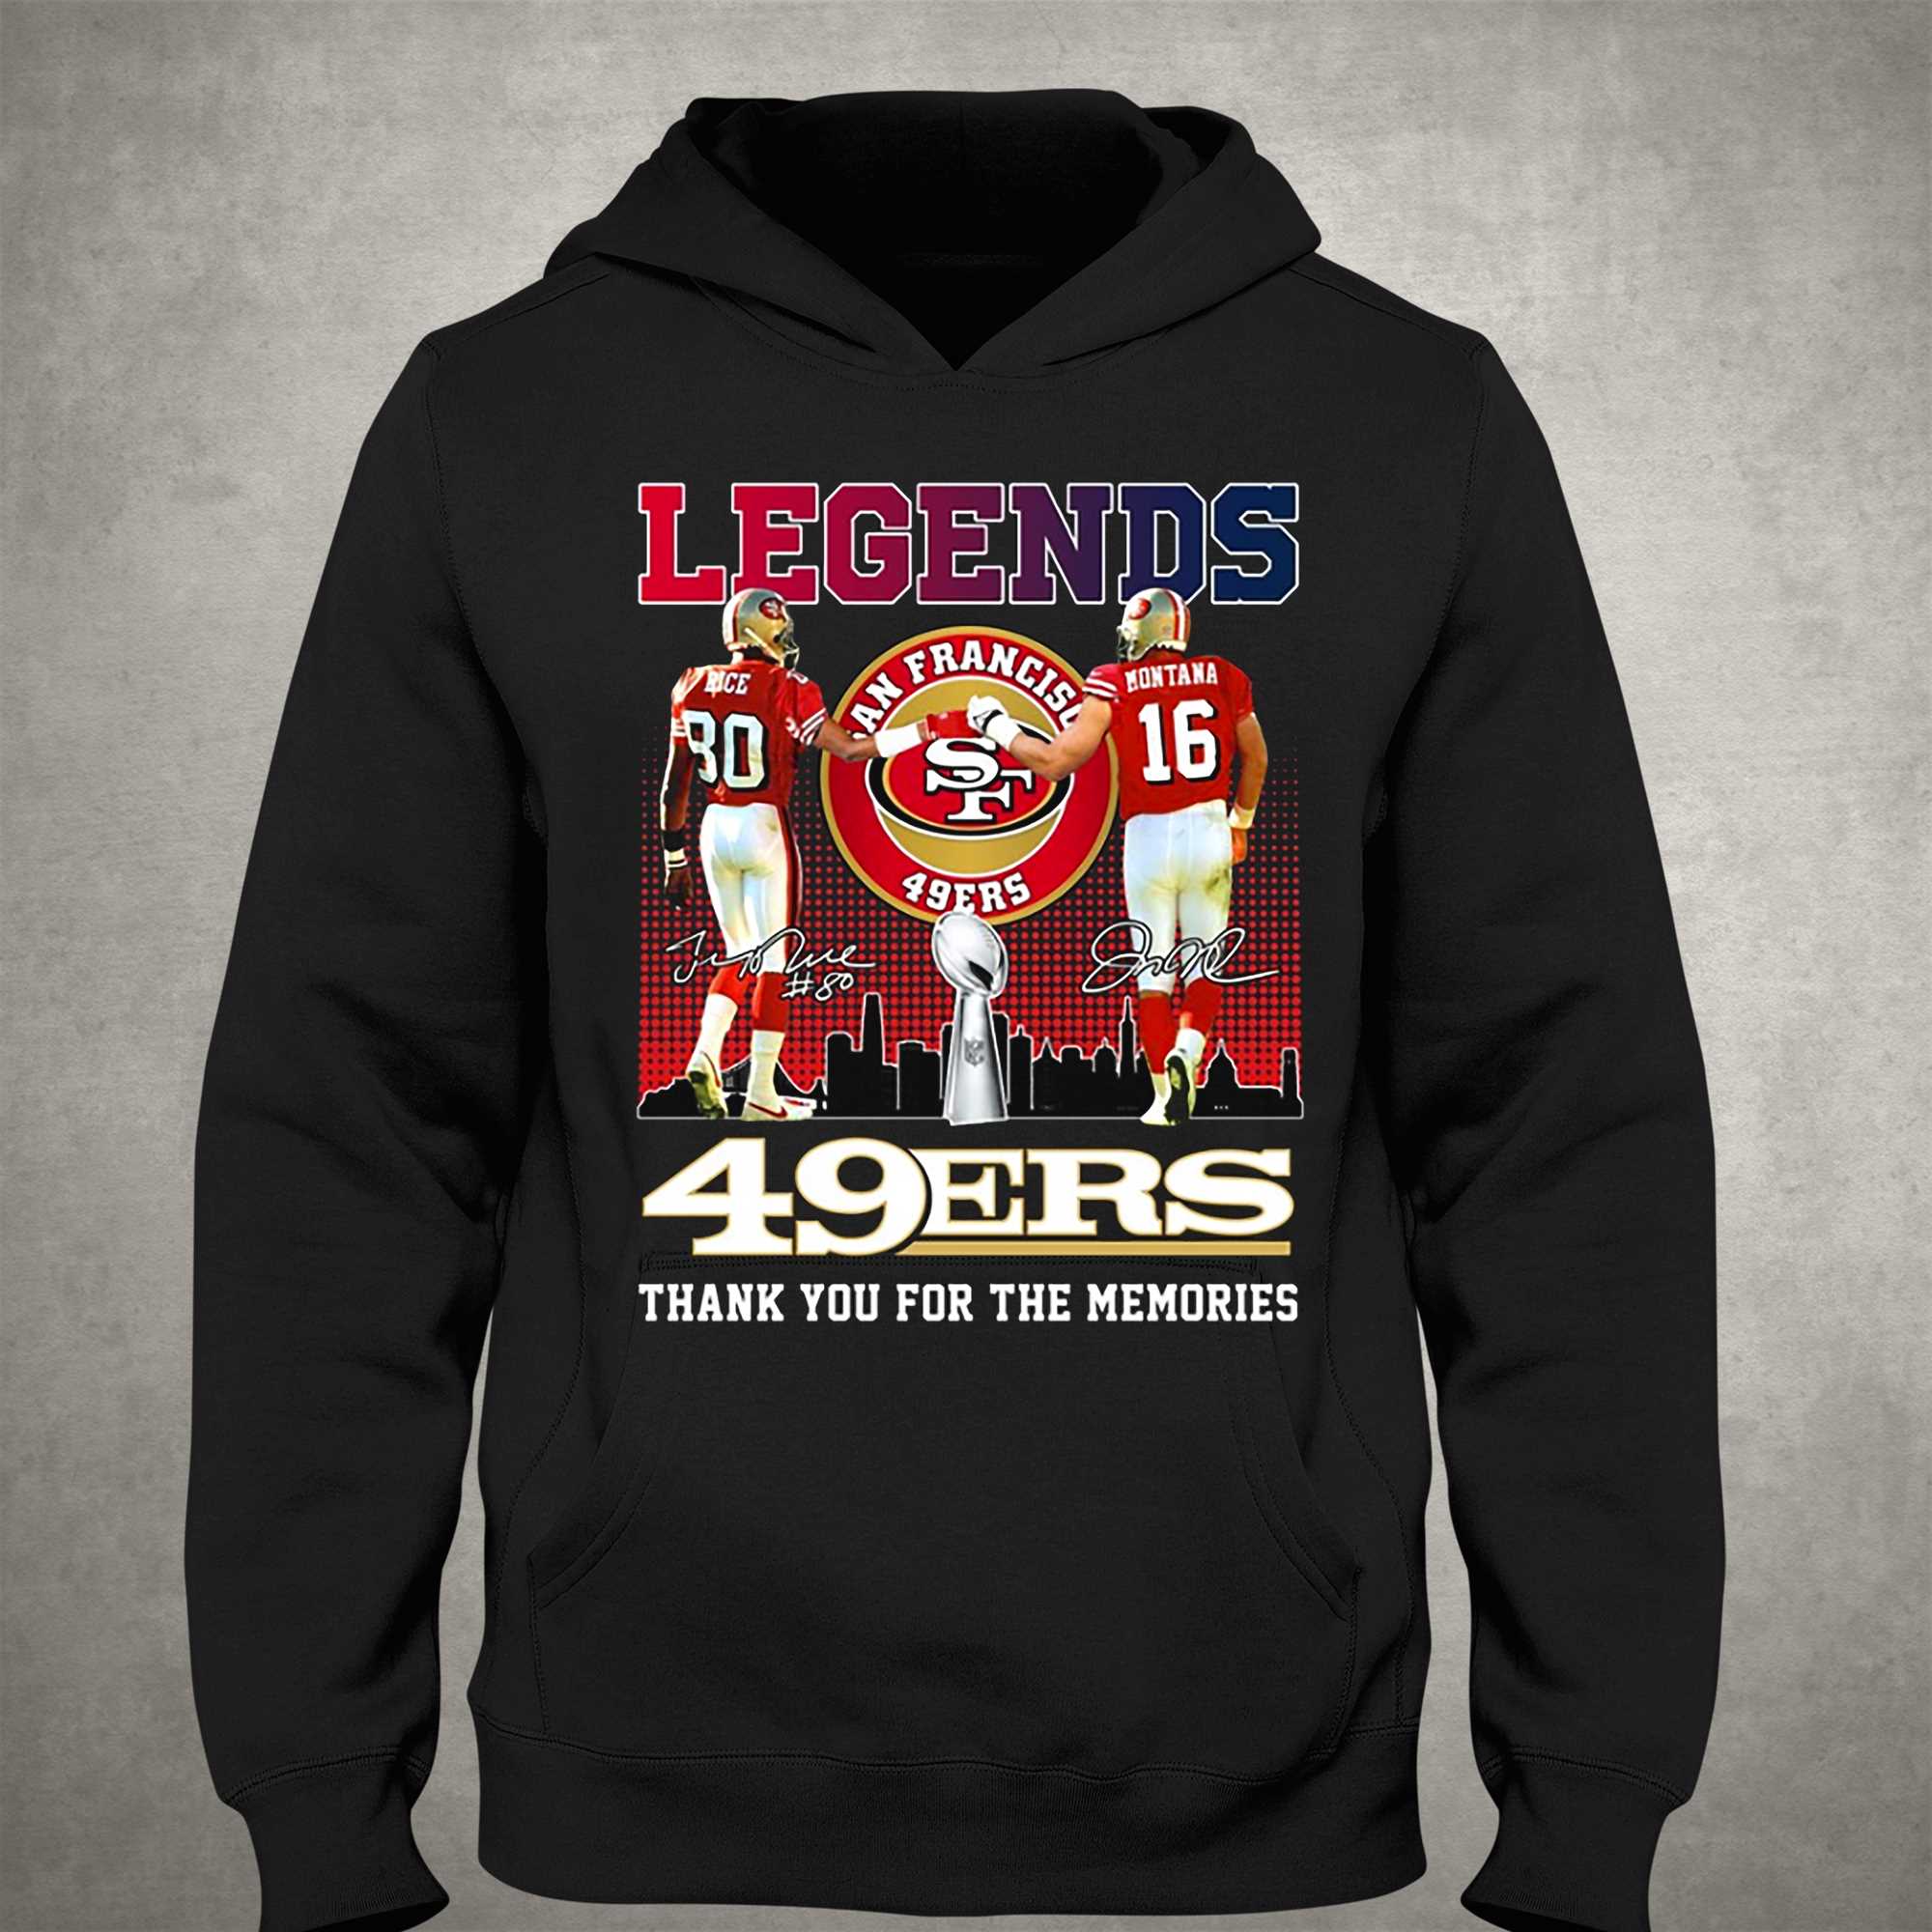 Legends Jerry Rice Joe Montana San Francisco 49ers Thank You For The ...